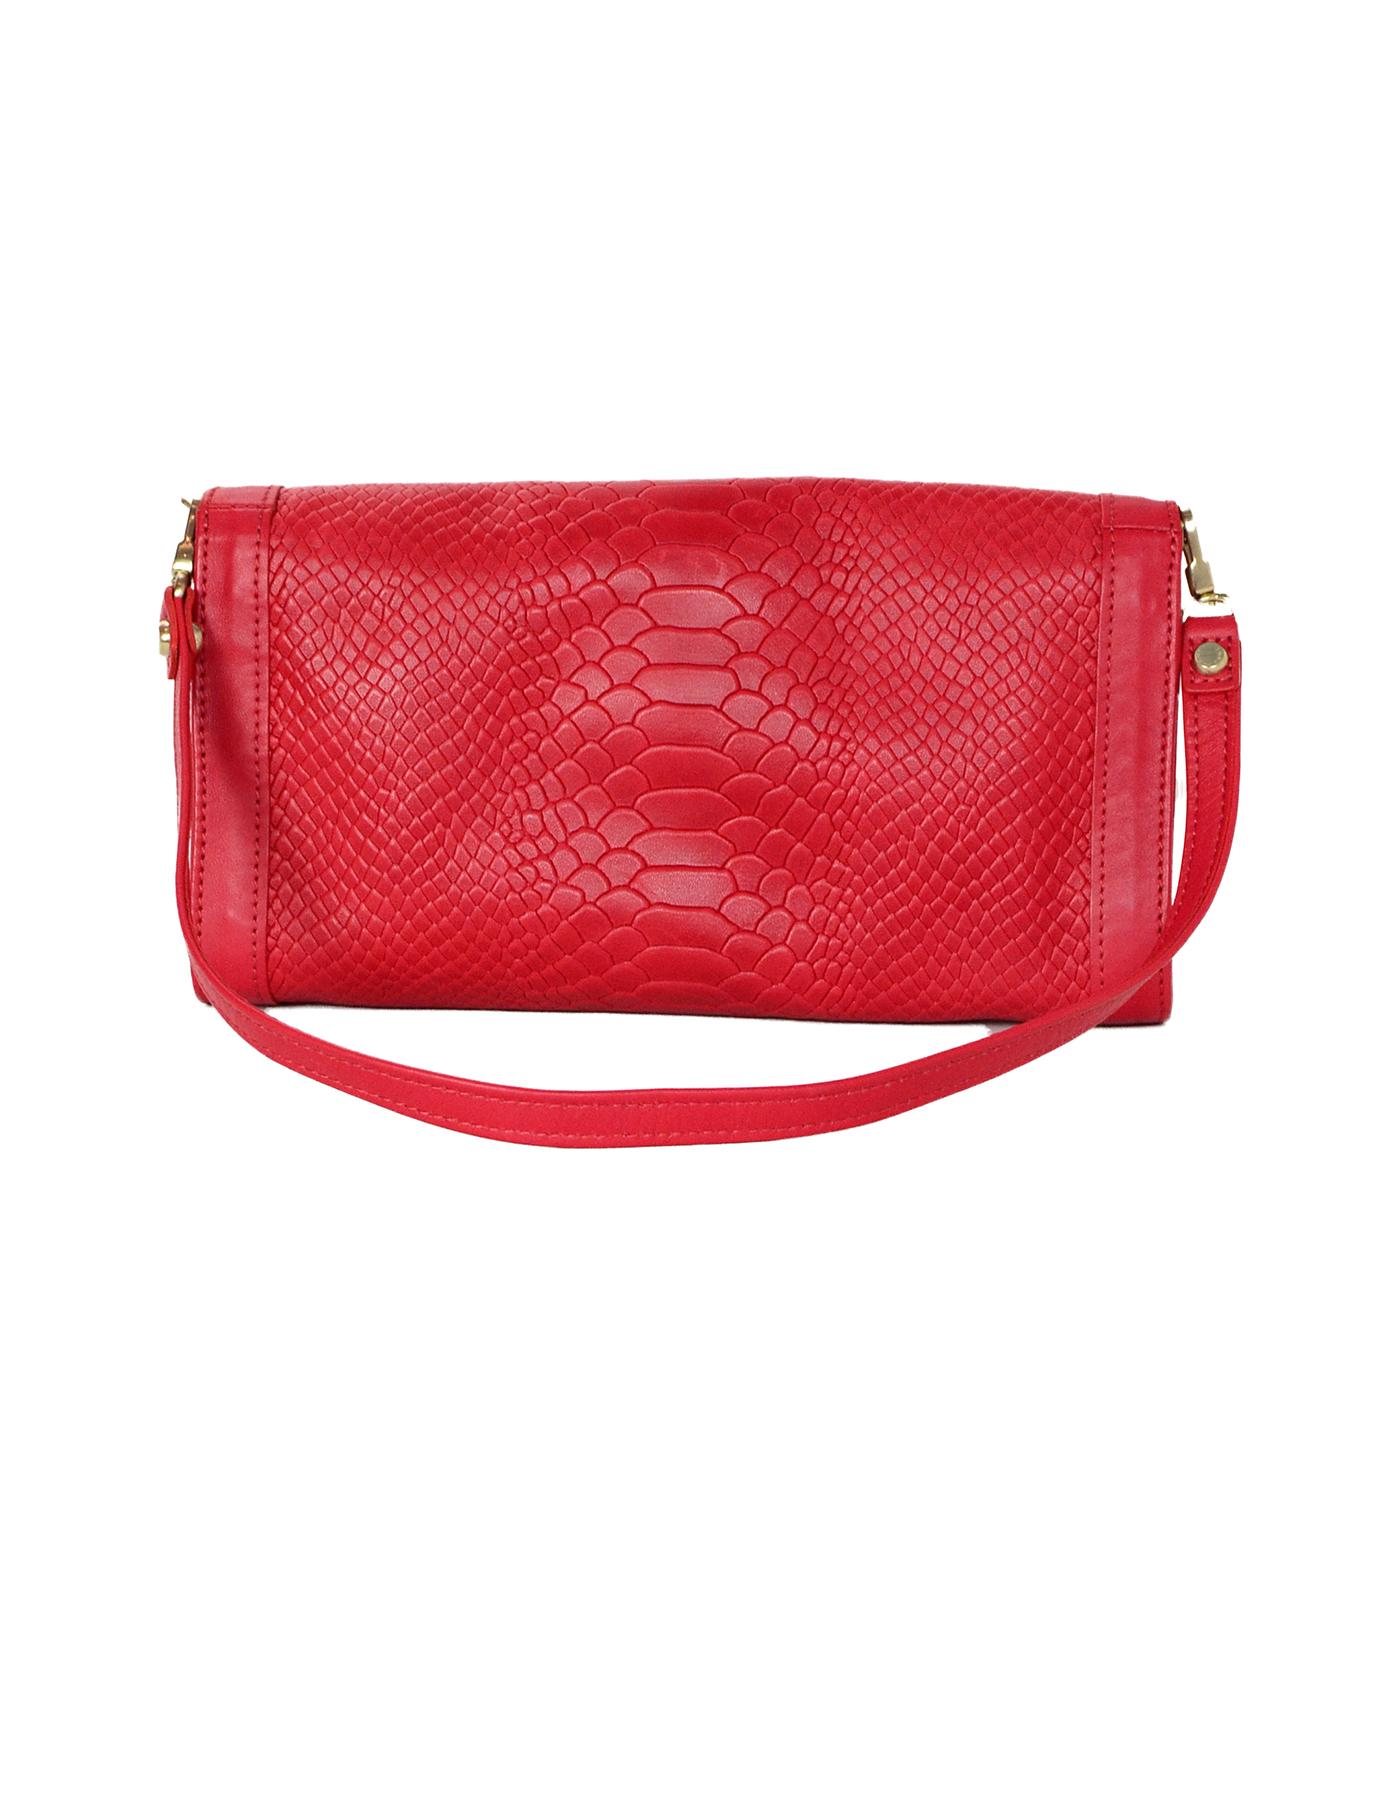 Longchamp Red Leather Embossed Snake Gatsby Flap Clutch/Shoulder Bag ...